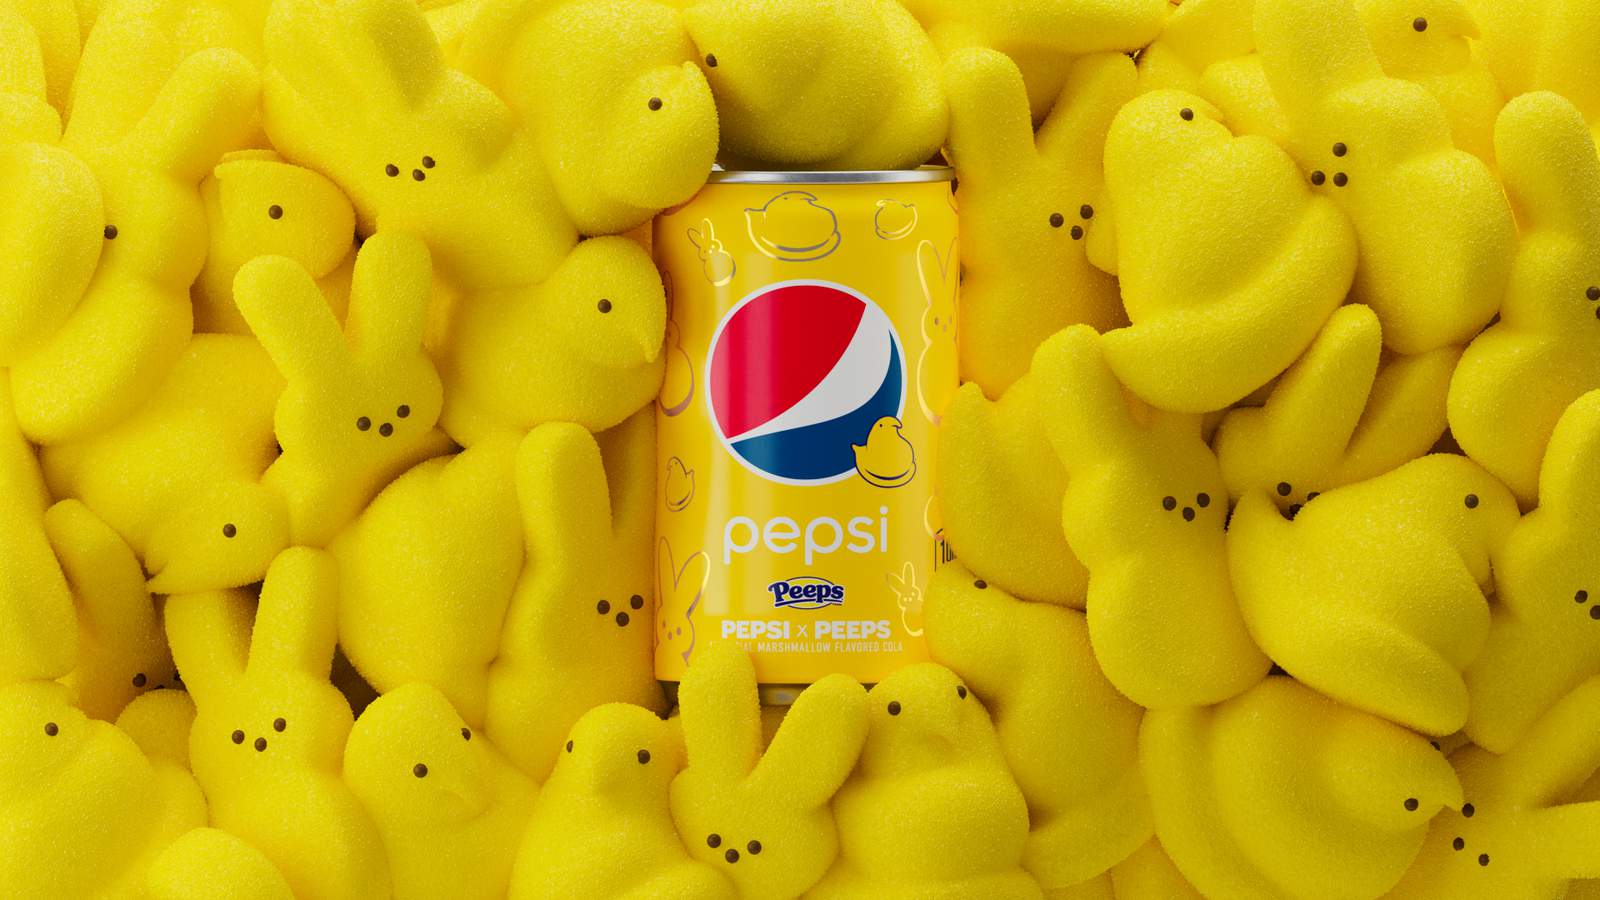 Pepsi announces Peeps-flavored marshmallow cola